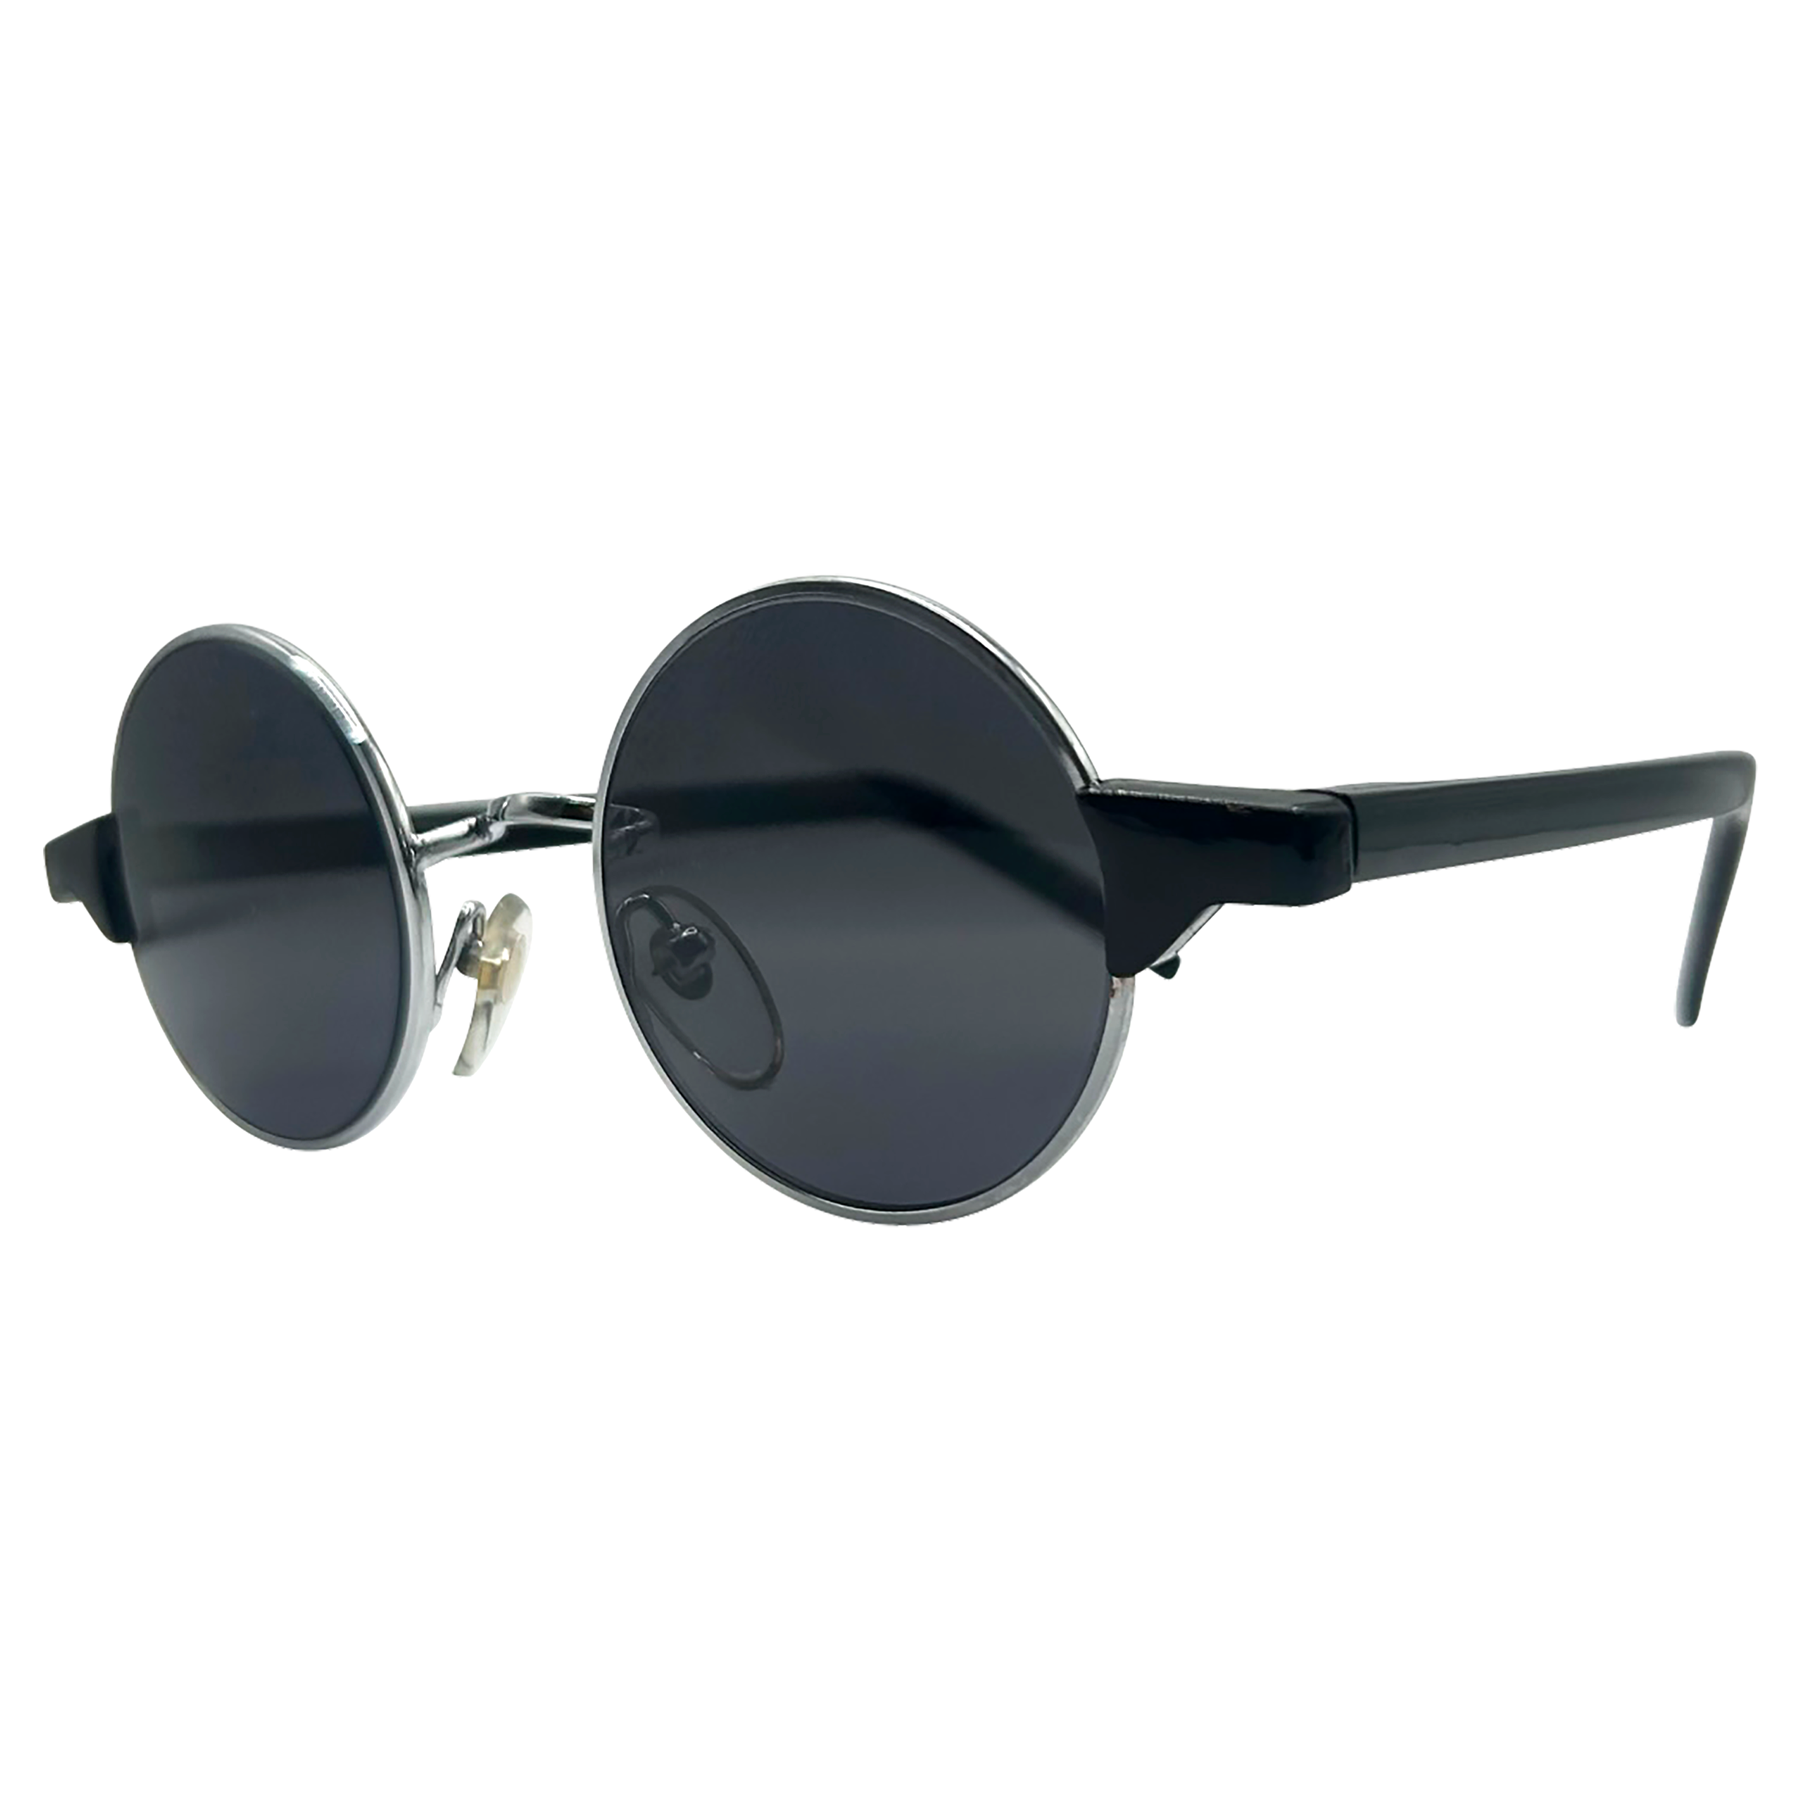 ONTRACK Round Sunglasses